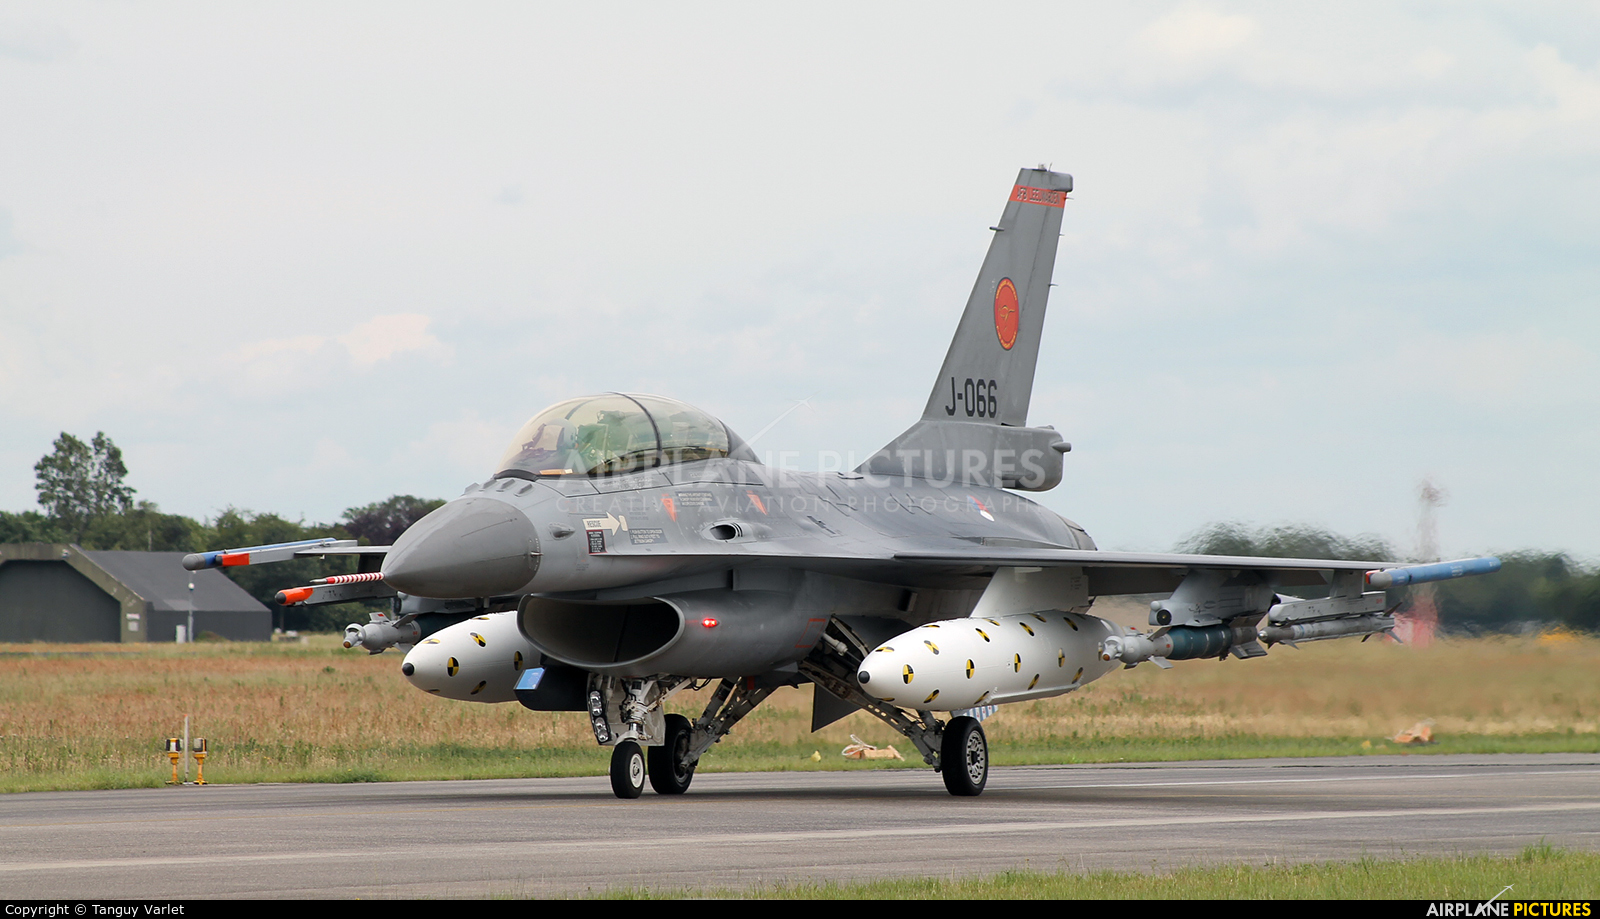 Netherlands - Air Force J-066 aircraft at Uden - Volkel